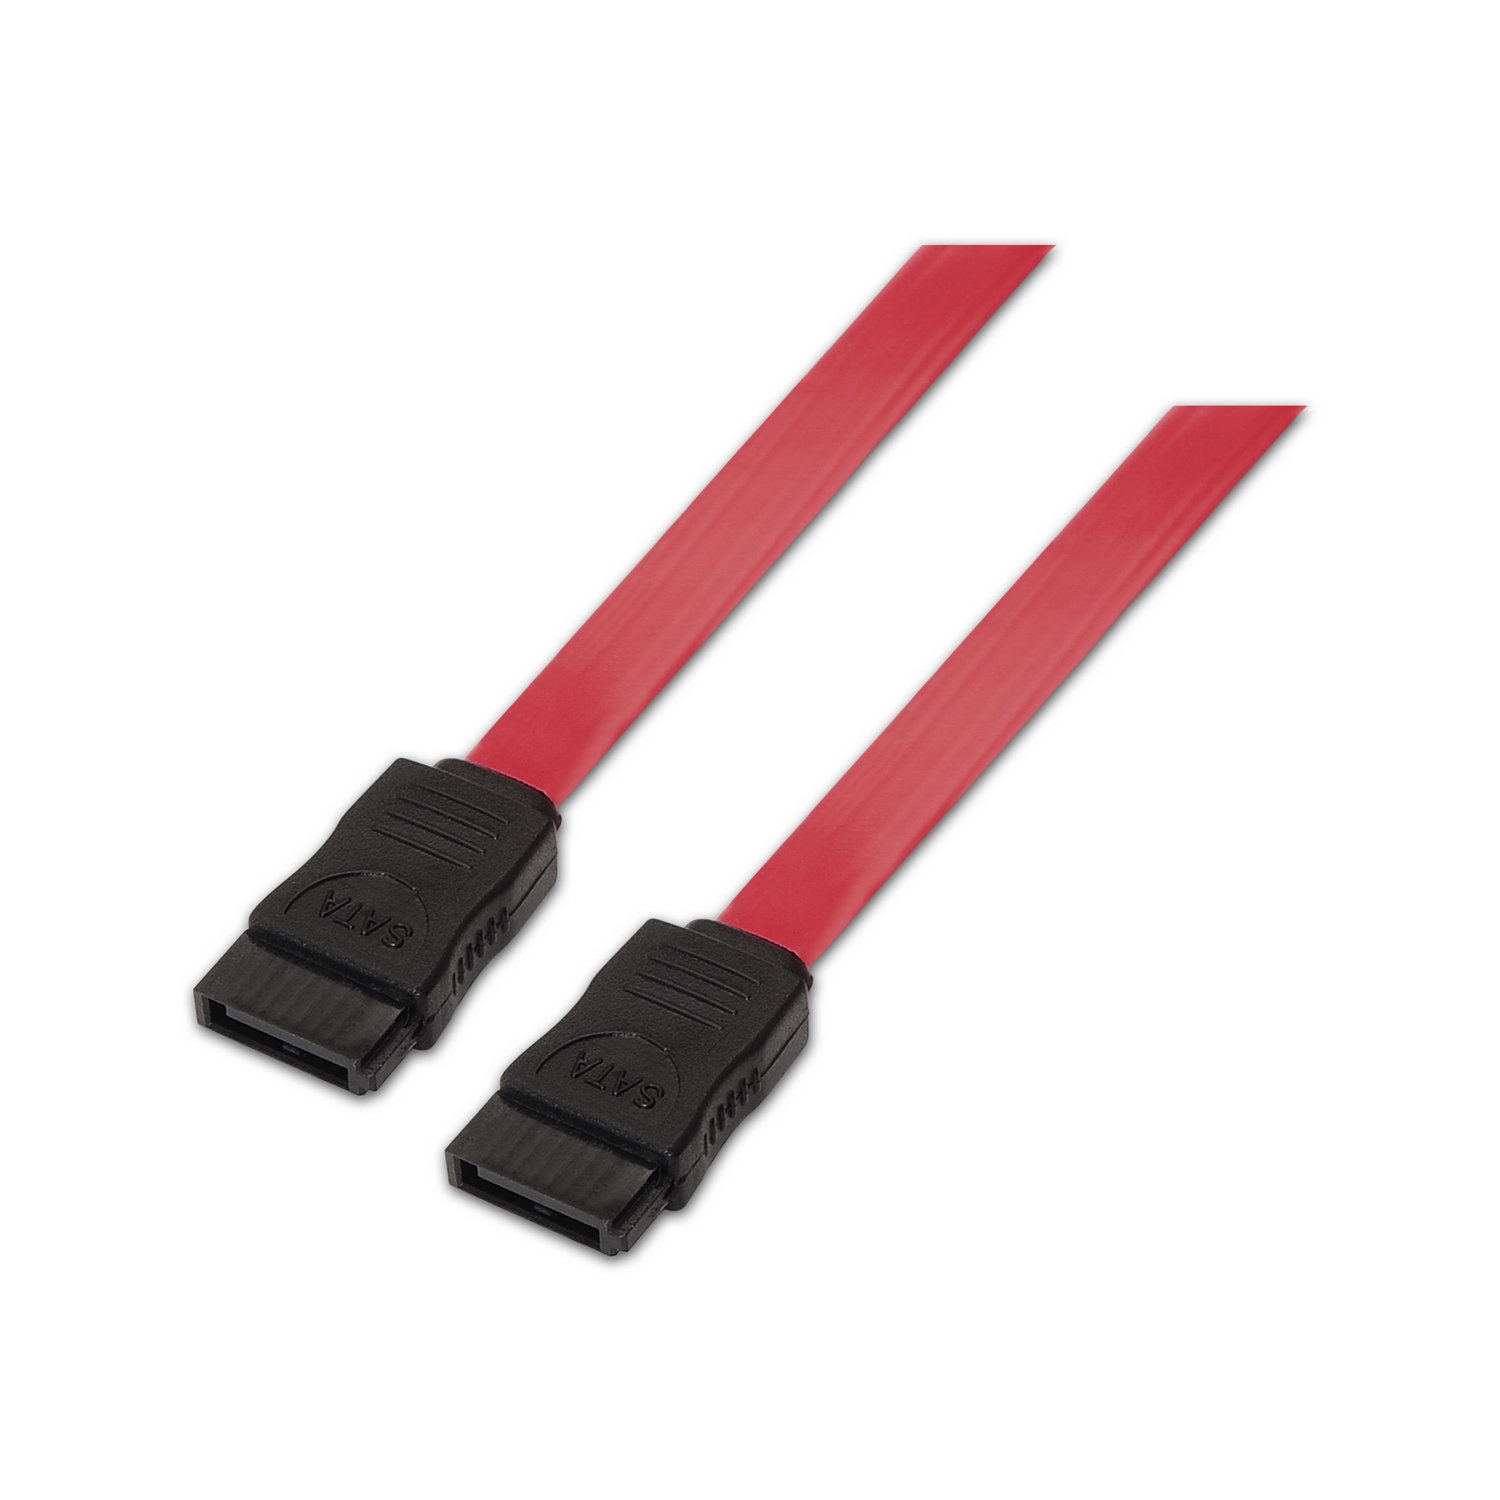 Cable SATA III datos 6G datos, rojo, 0.5 metros para disco duro SATA I, II,  III SSD - AISENS®